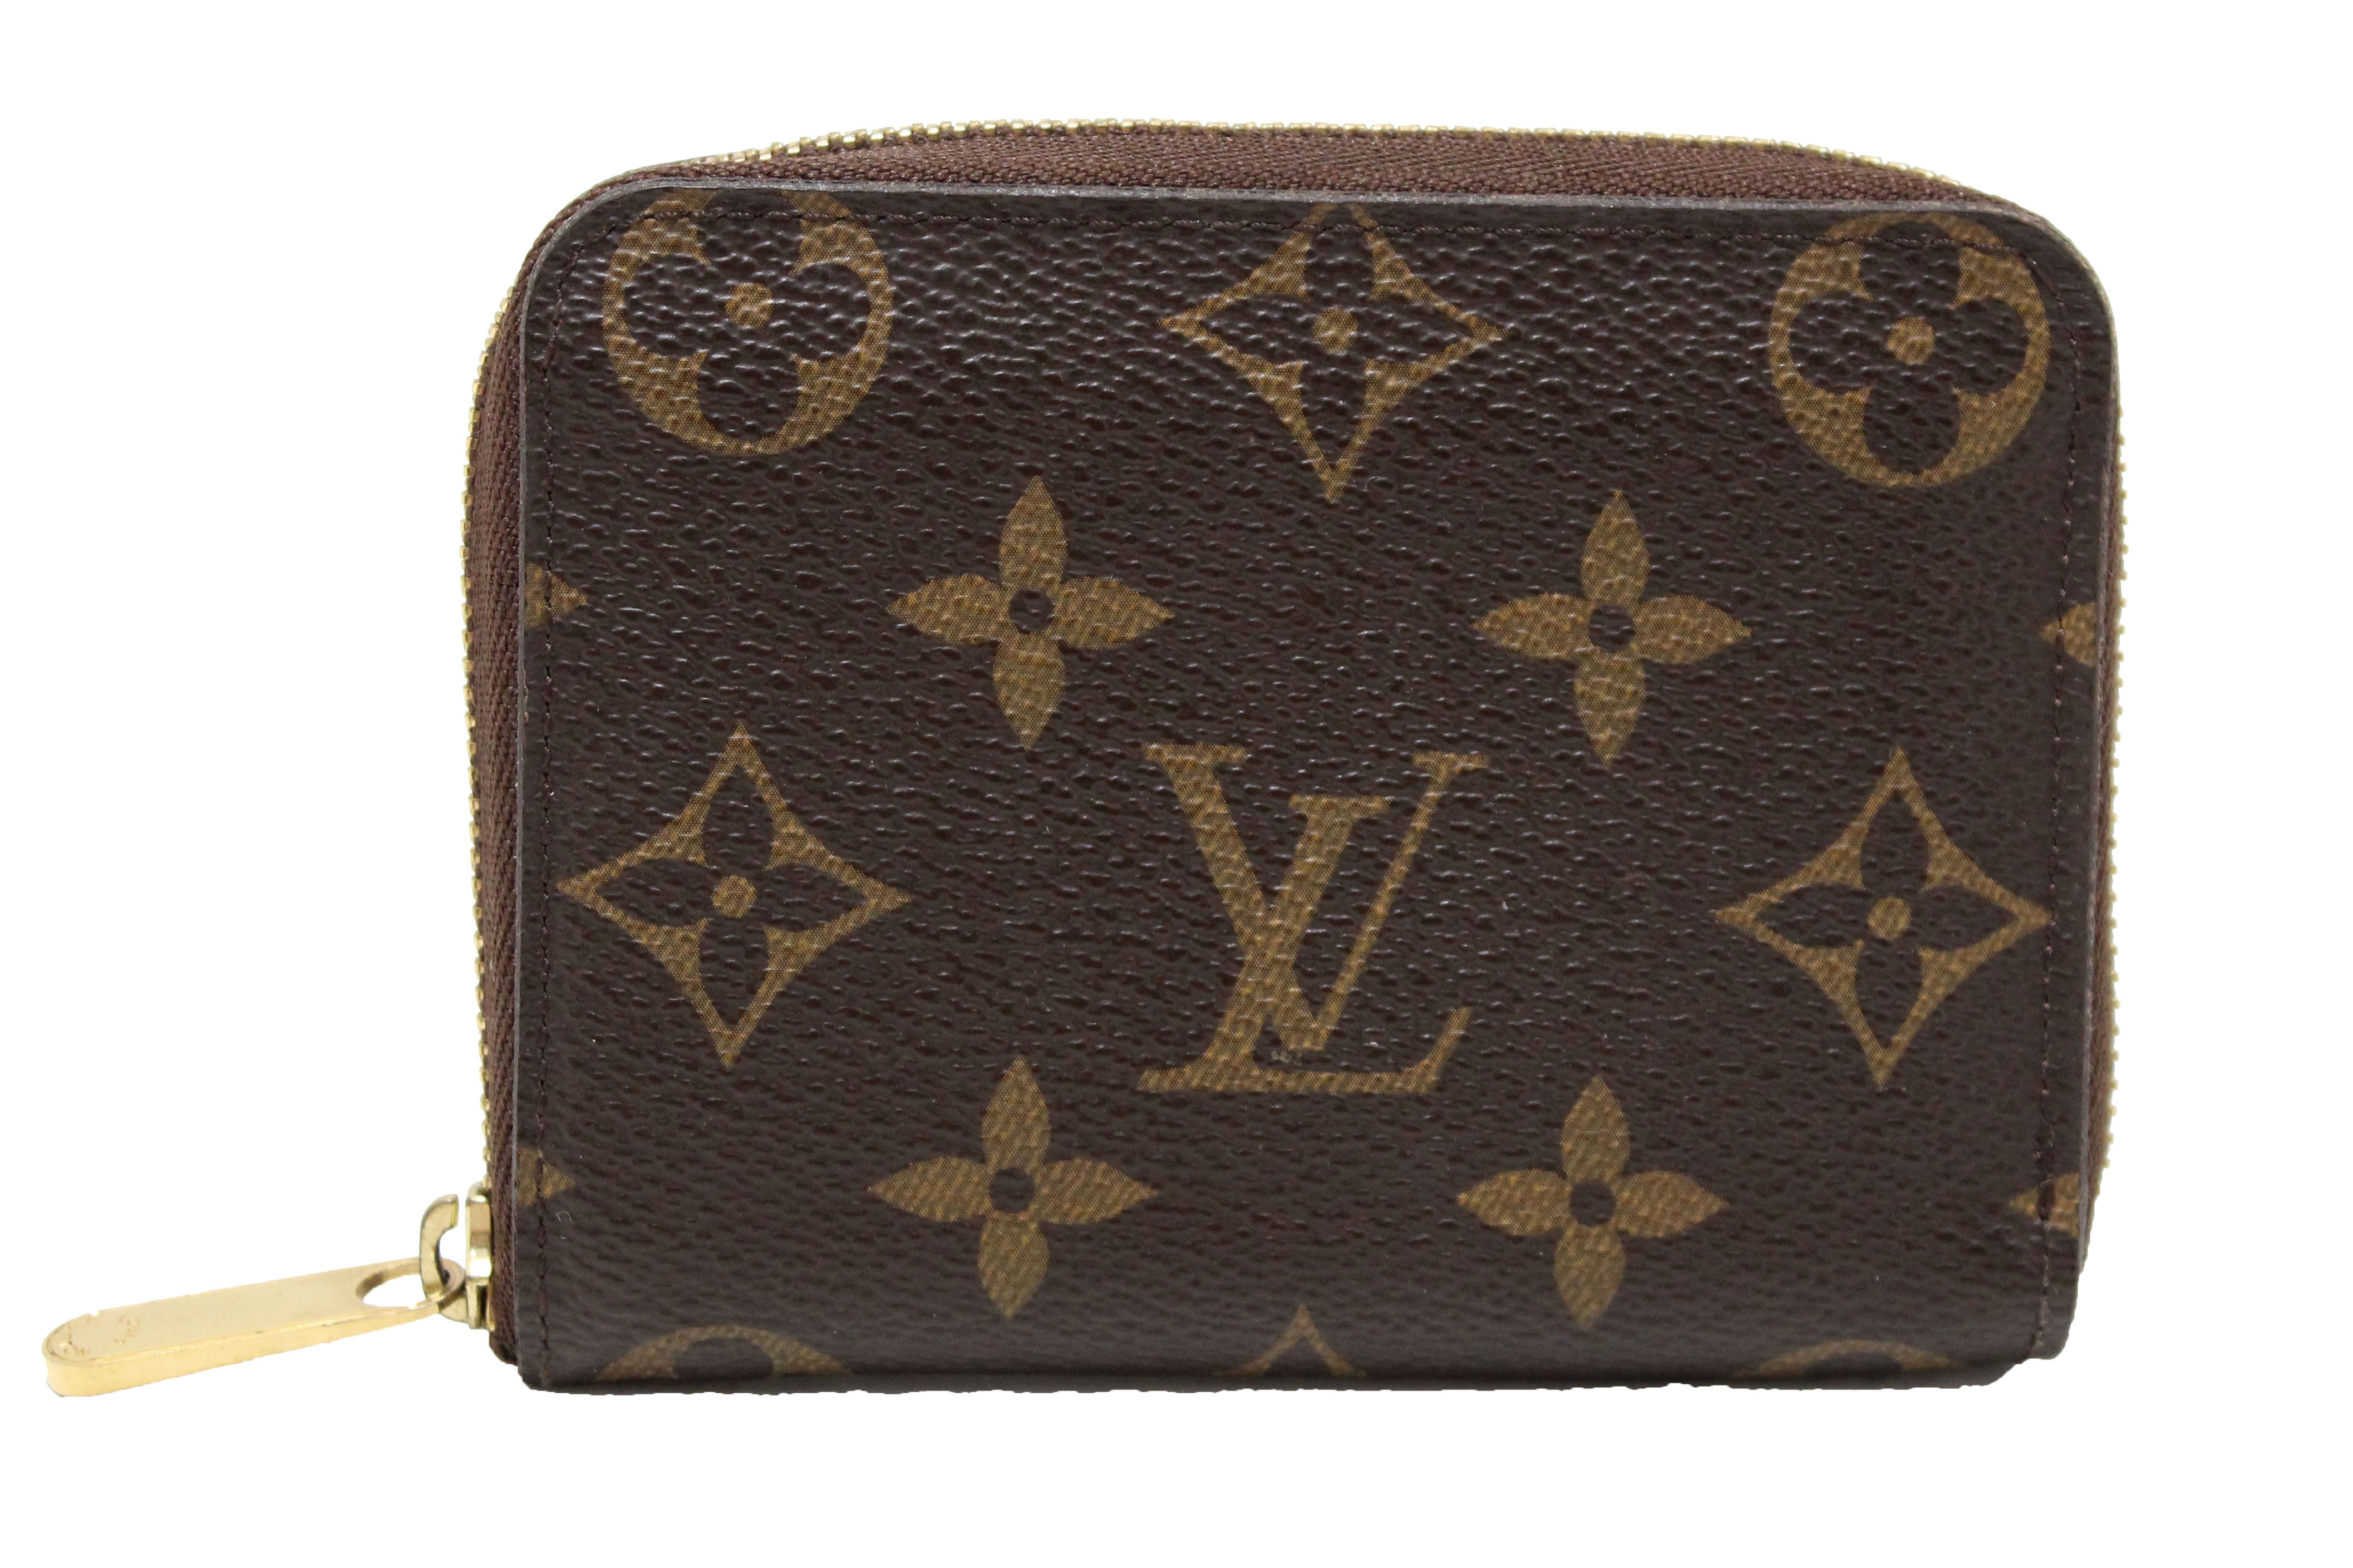 where to buy authentic louis vuitton handbags